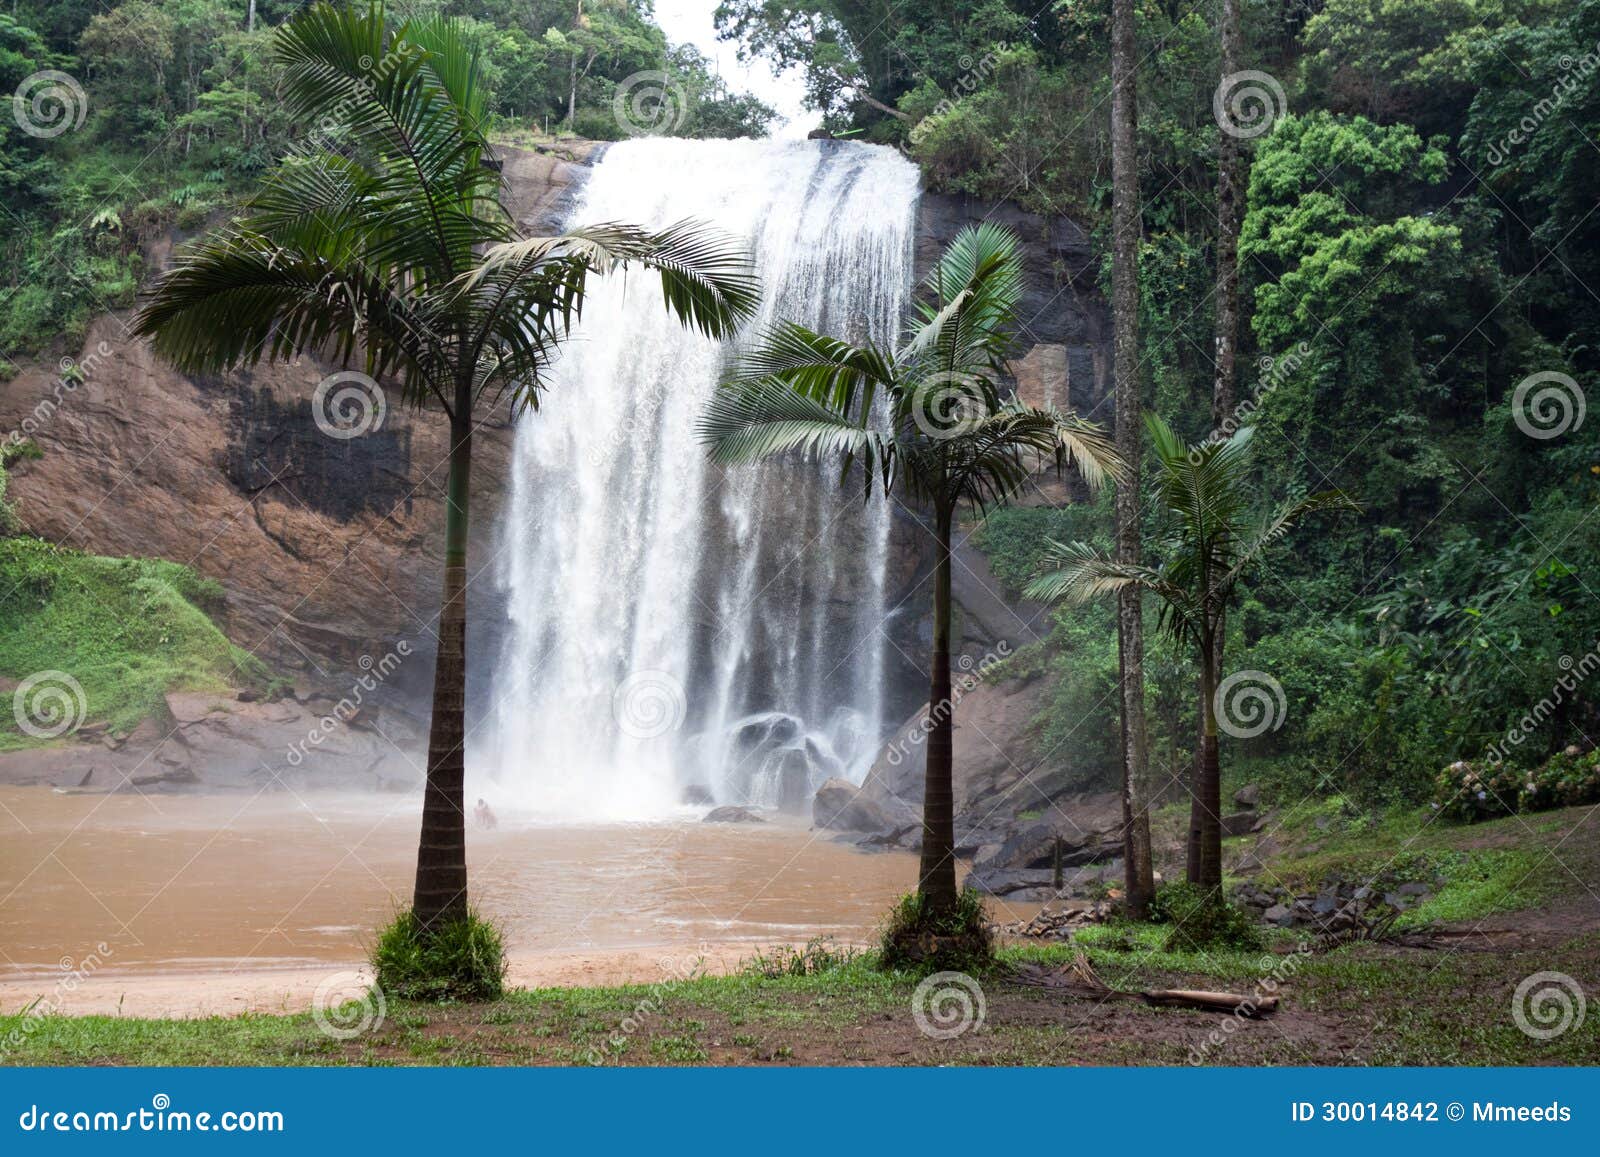 cachoeira grande waterfall, lagoinha / sp